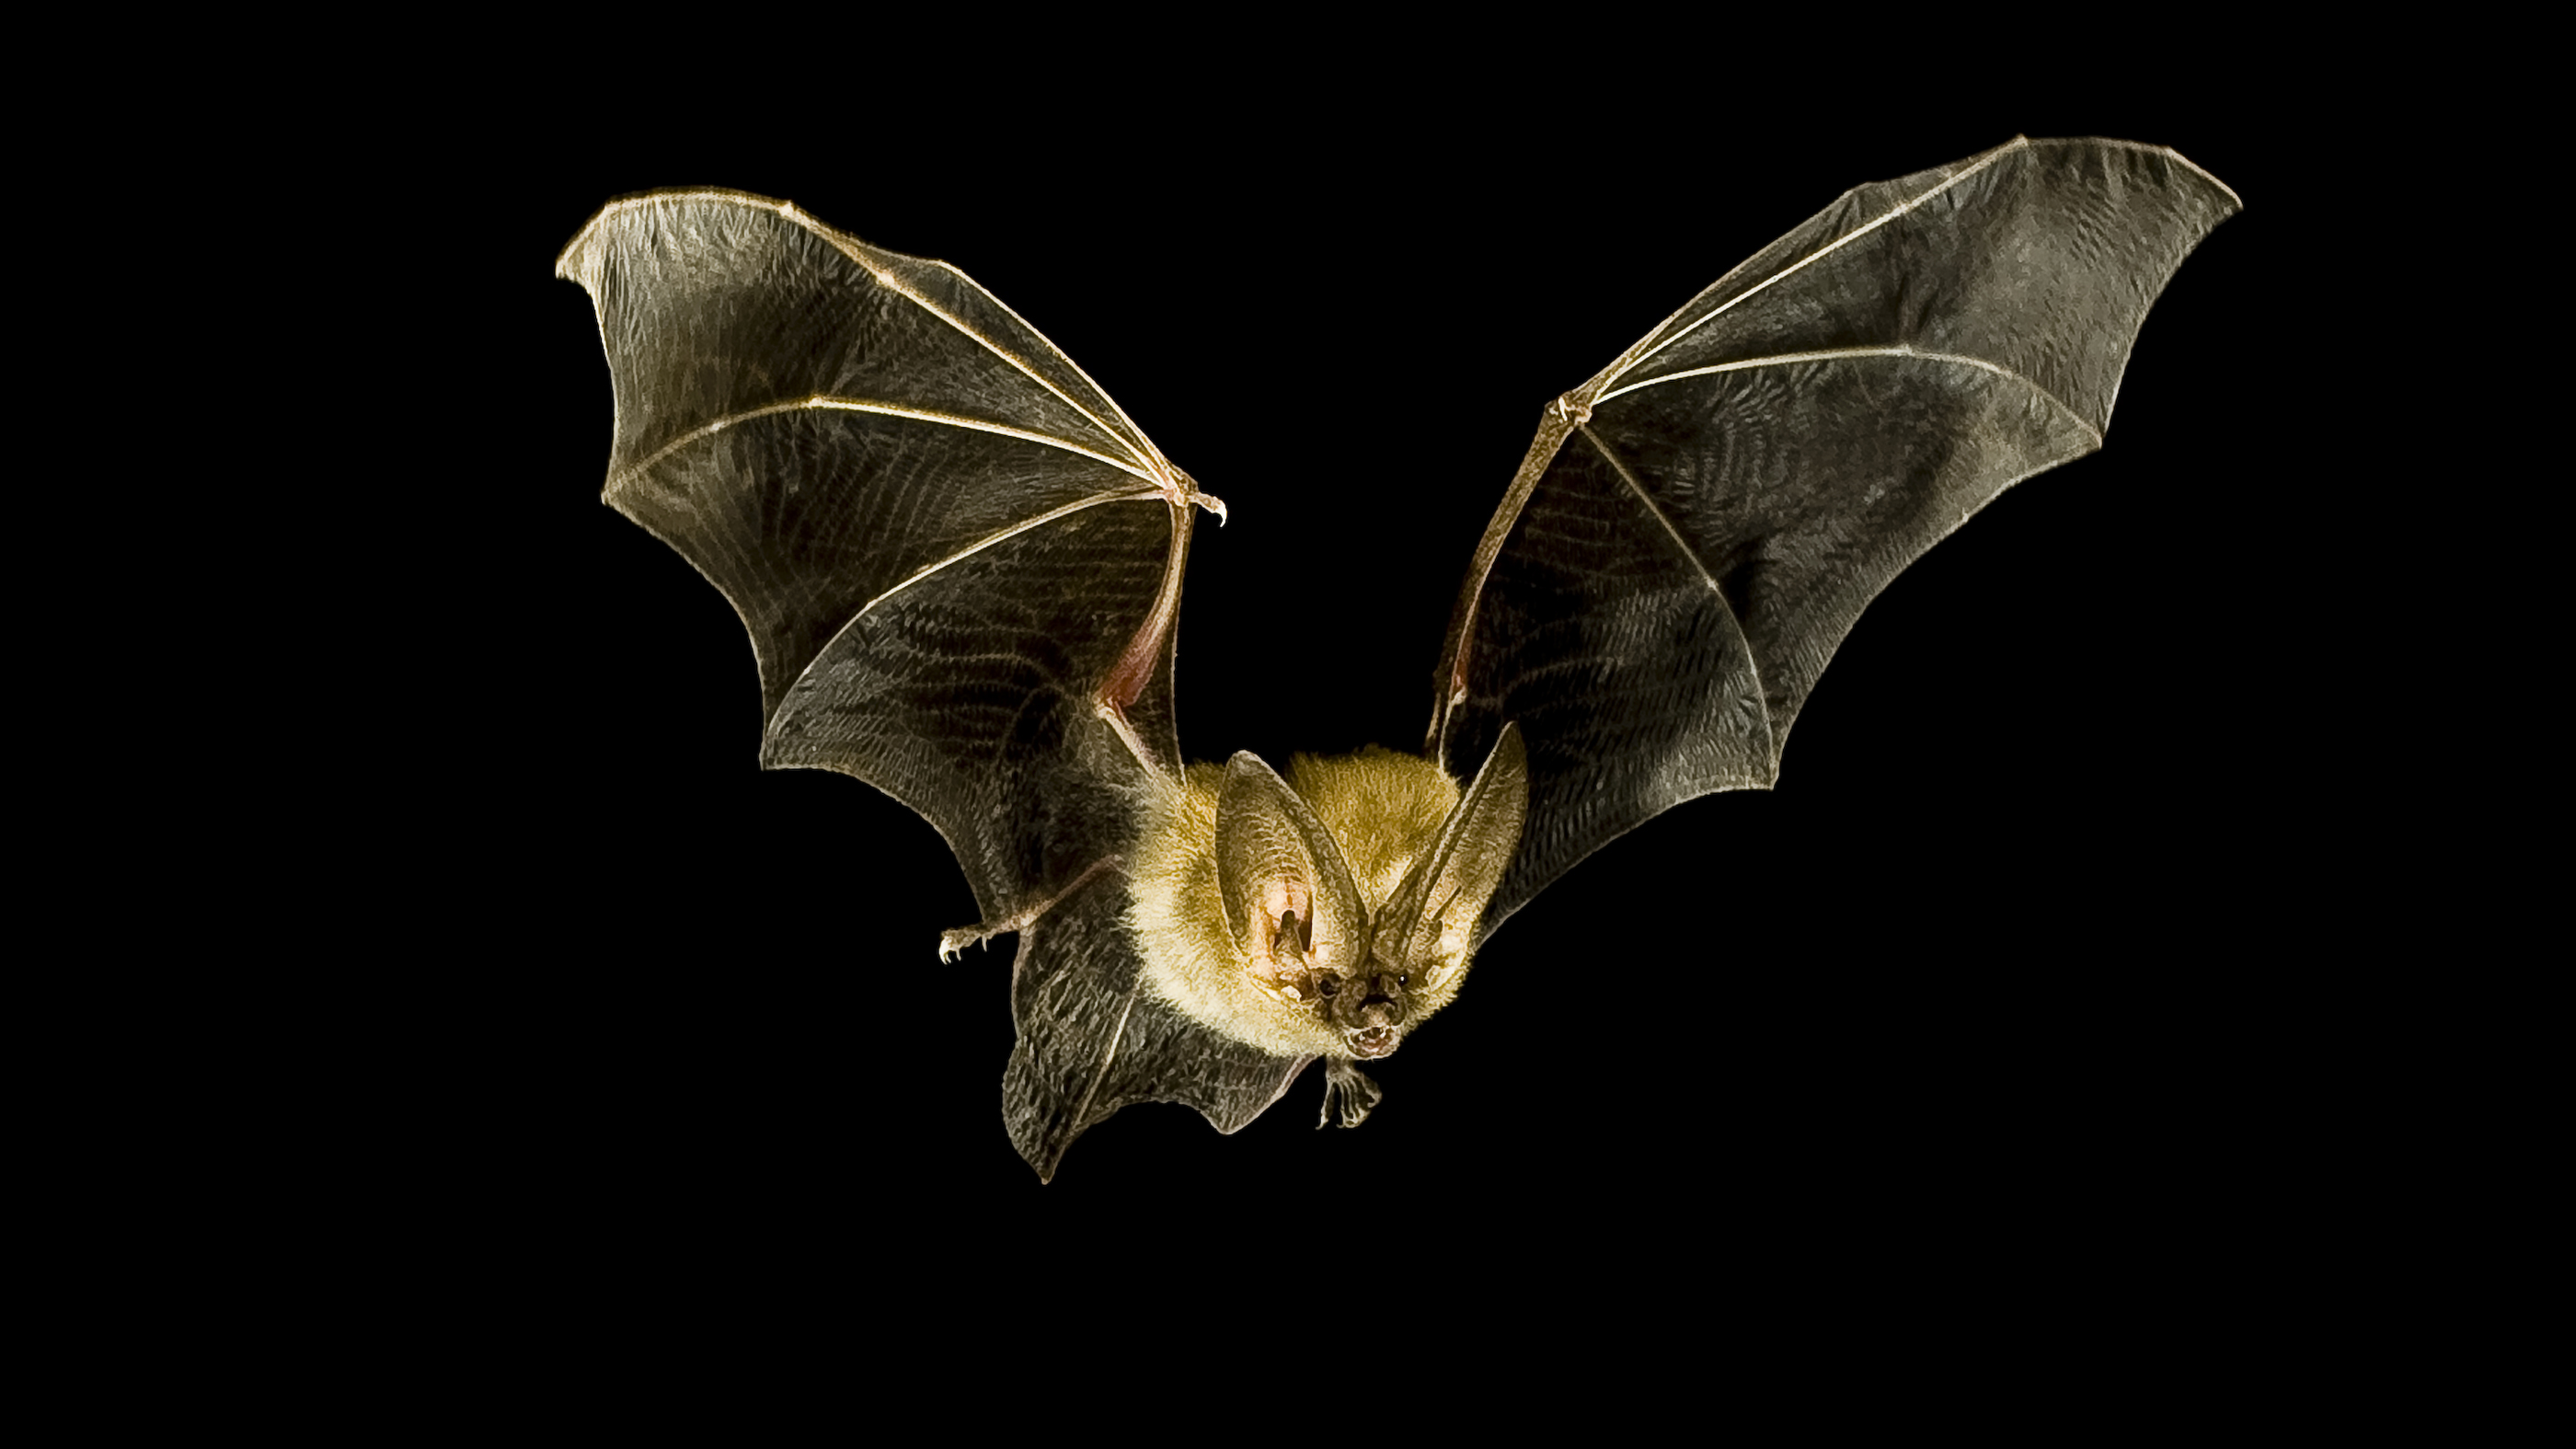 Bats navigate and identify prey by echolocation.